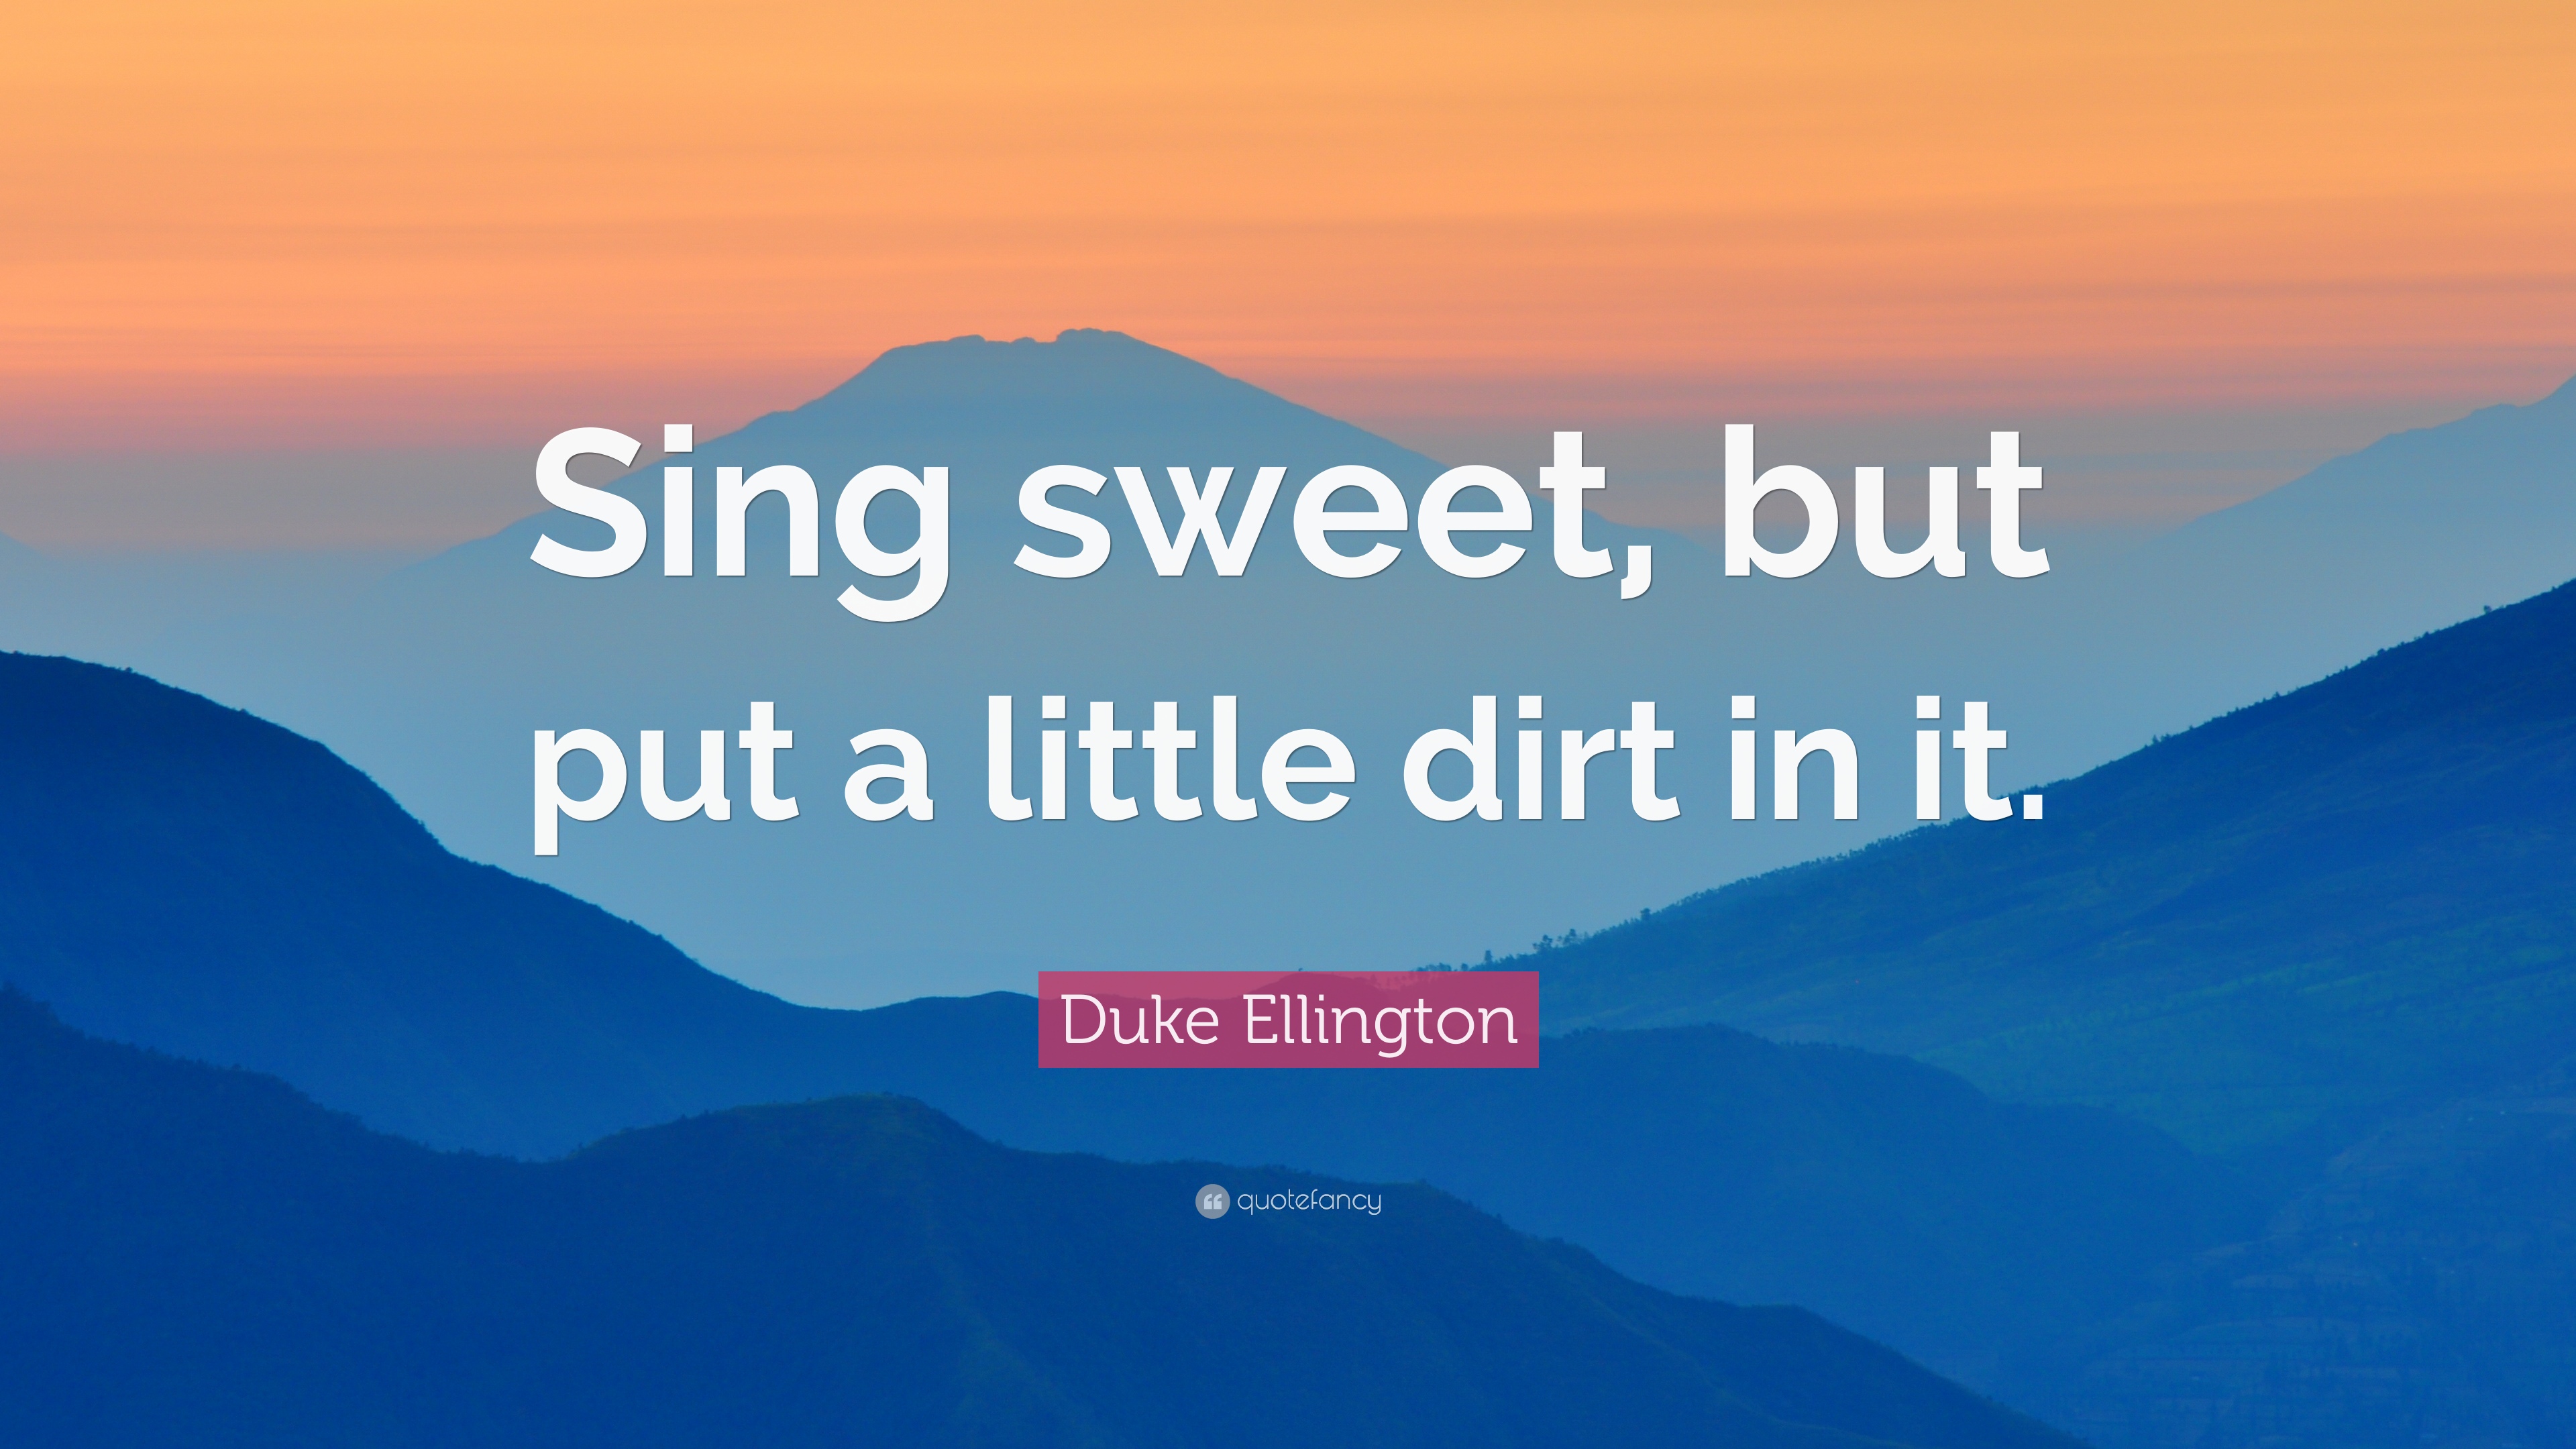 Duke Ellington Quote: “Sing sweet, but put a little dirt